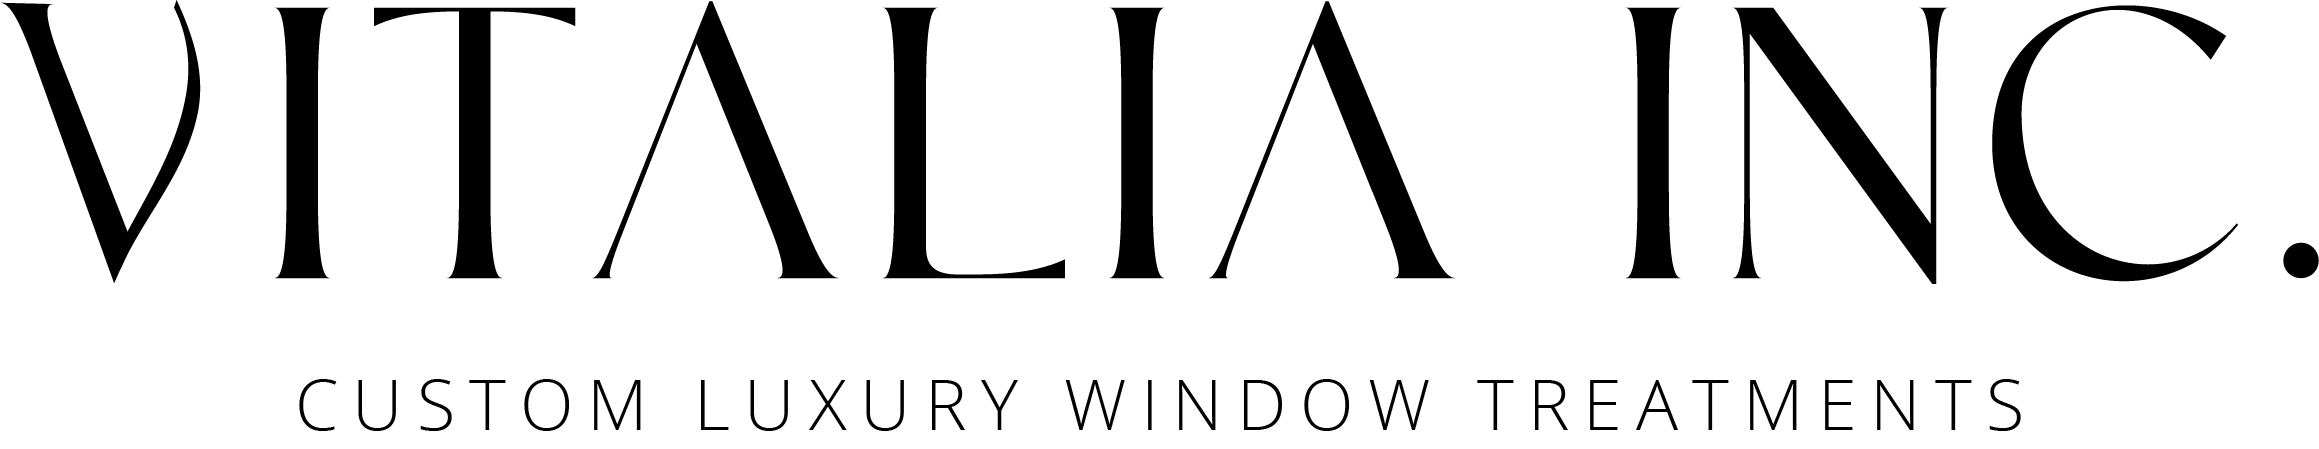 Primary Logo Variaiton